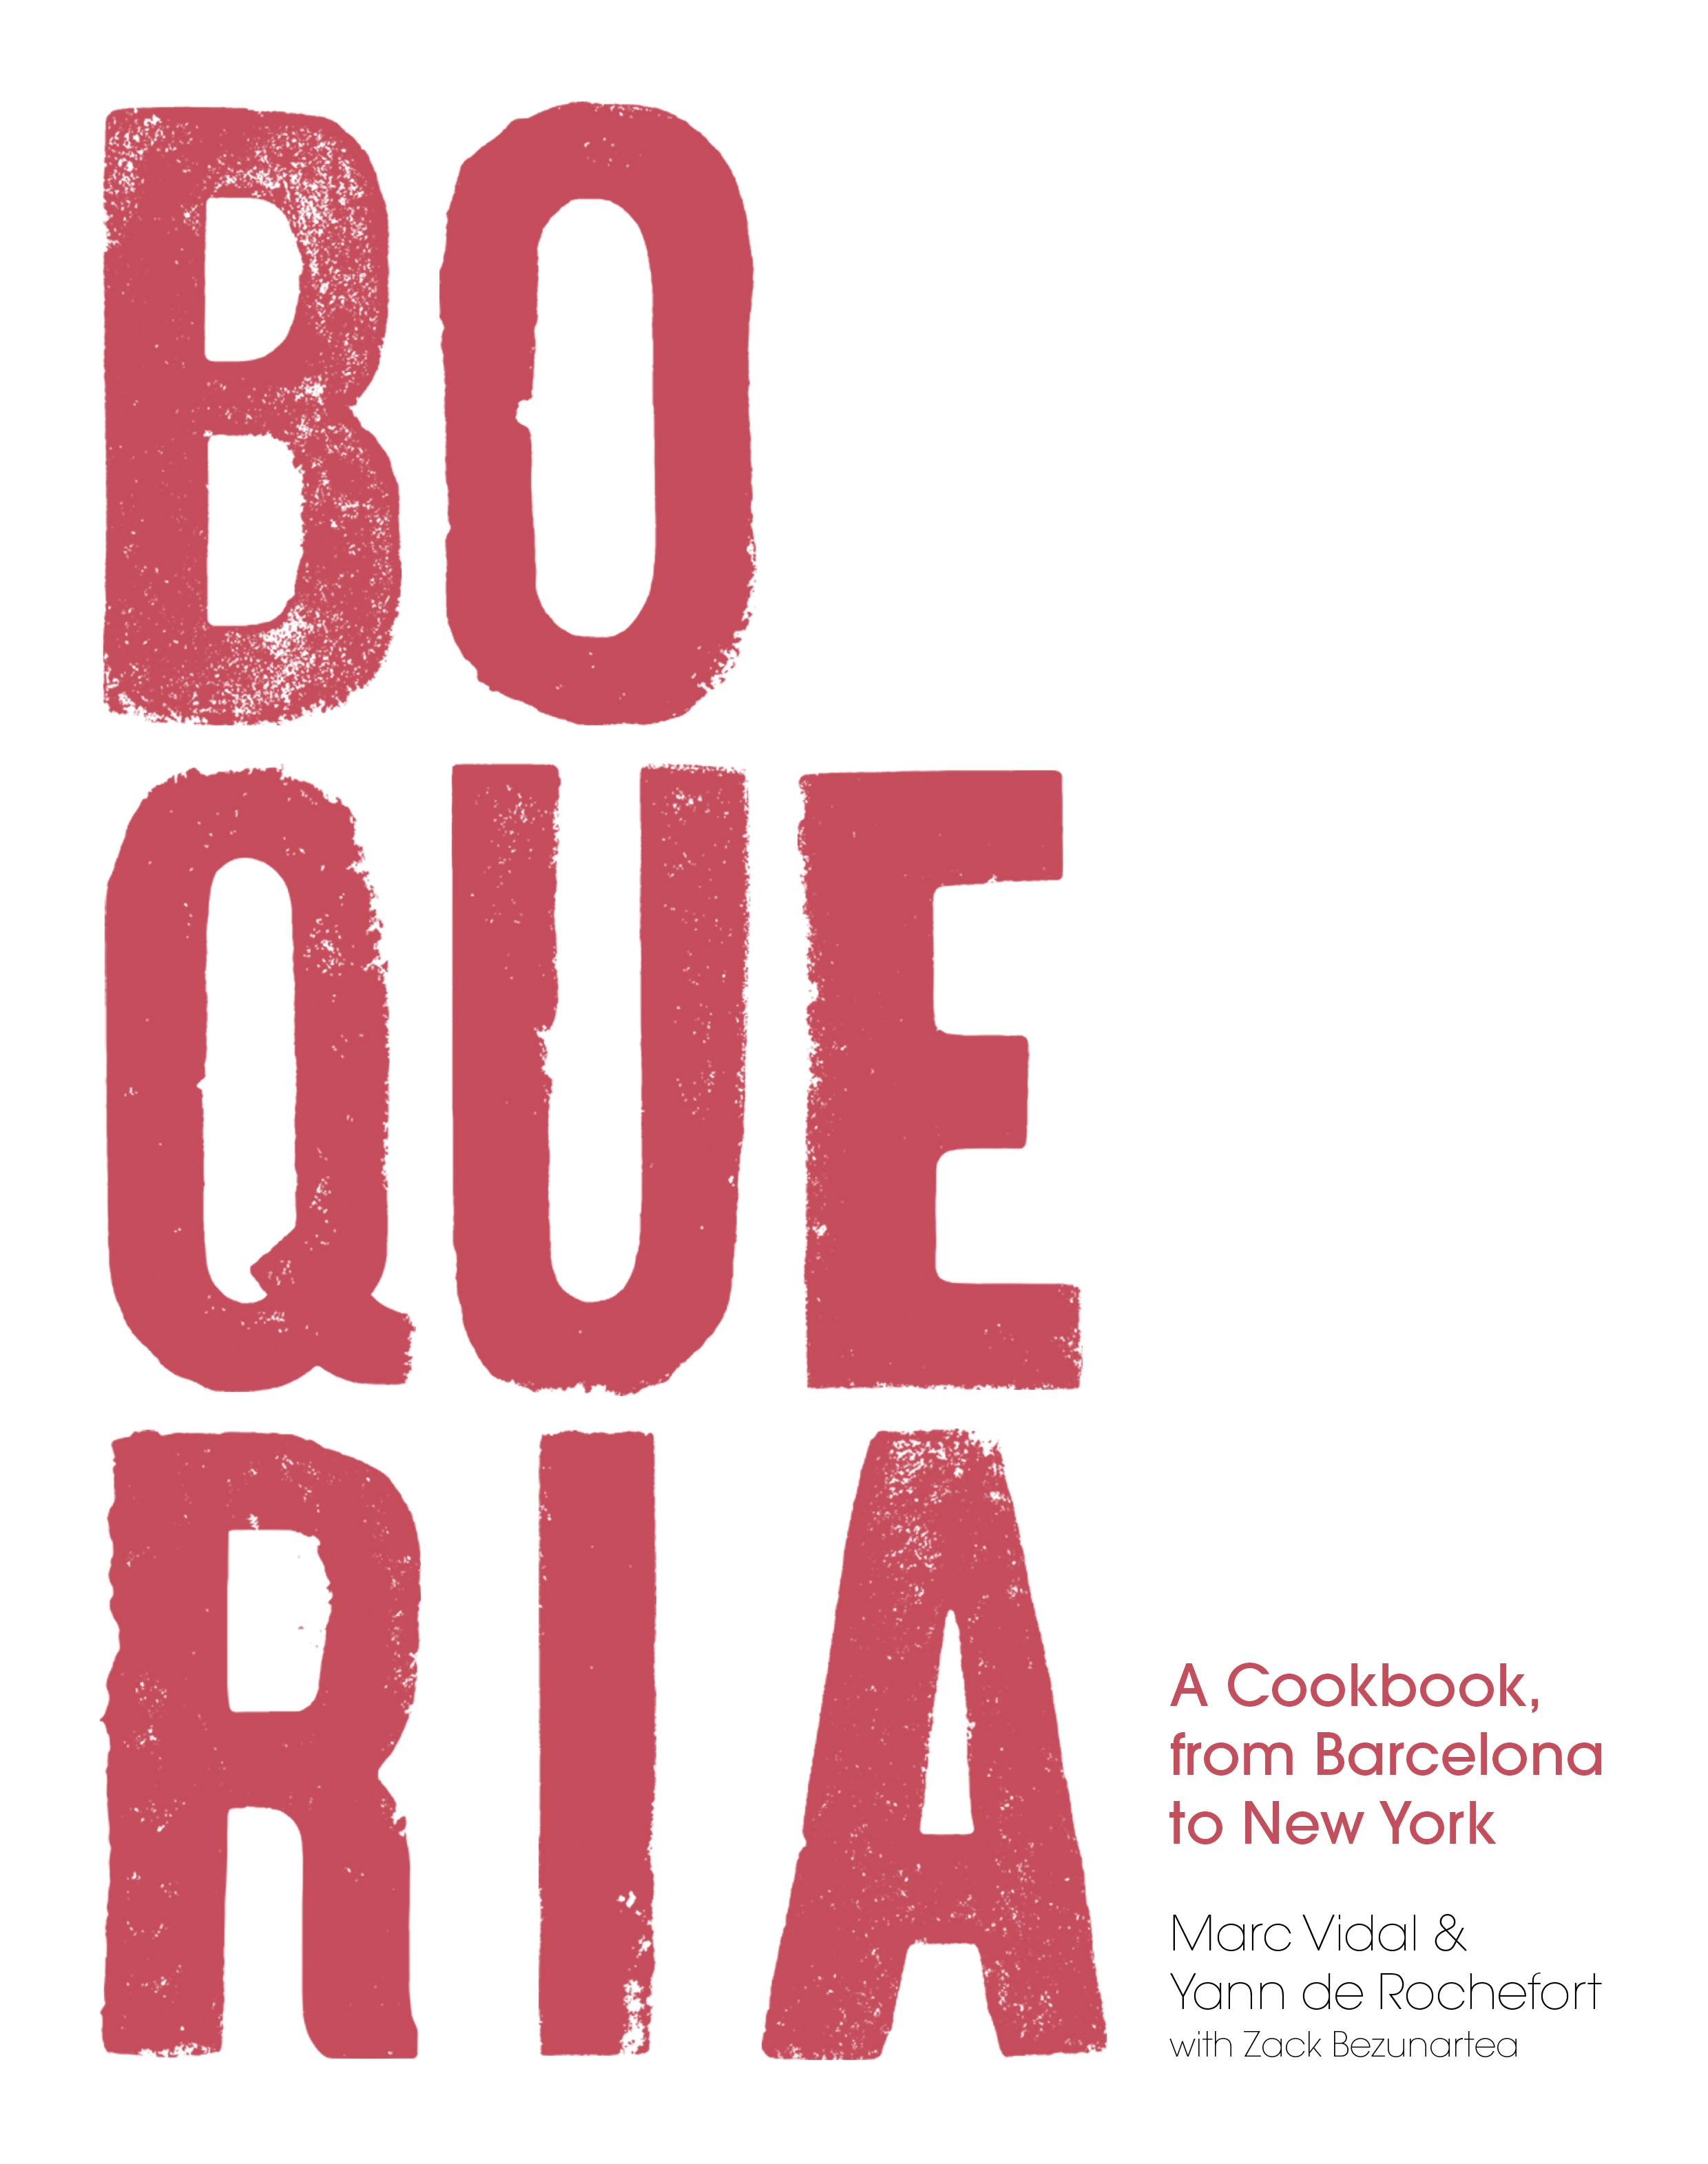 Book Launch: Boqueria: A Cookbook, from Barcelona to New York by Marc Vidal & Yann de Rochefort